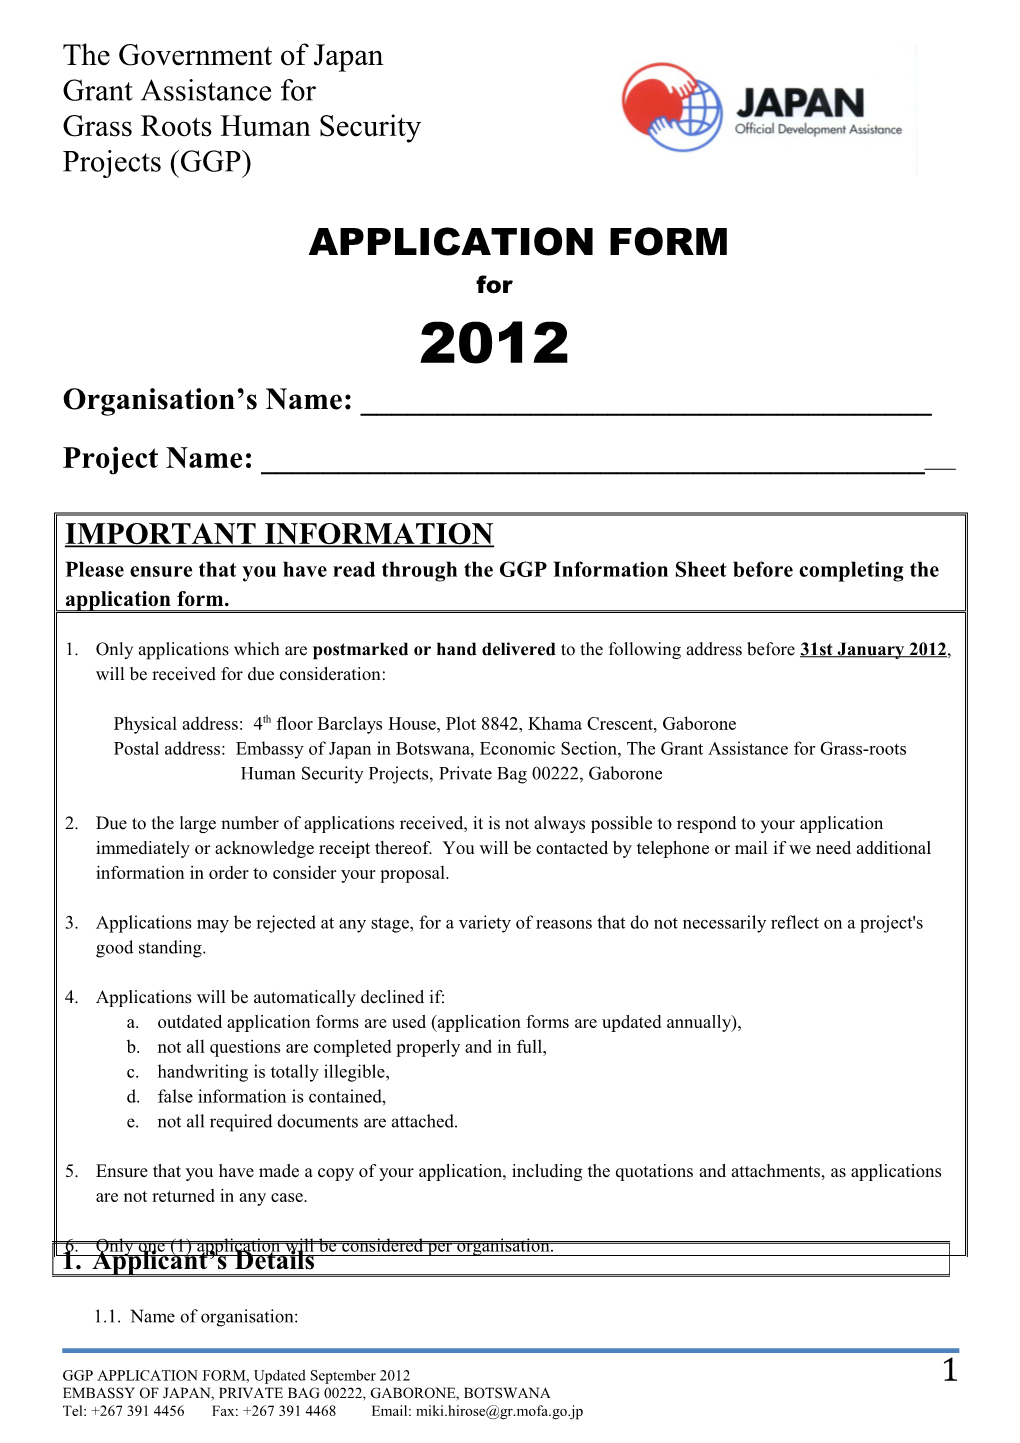 Ggp Application Form